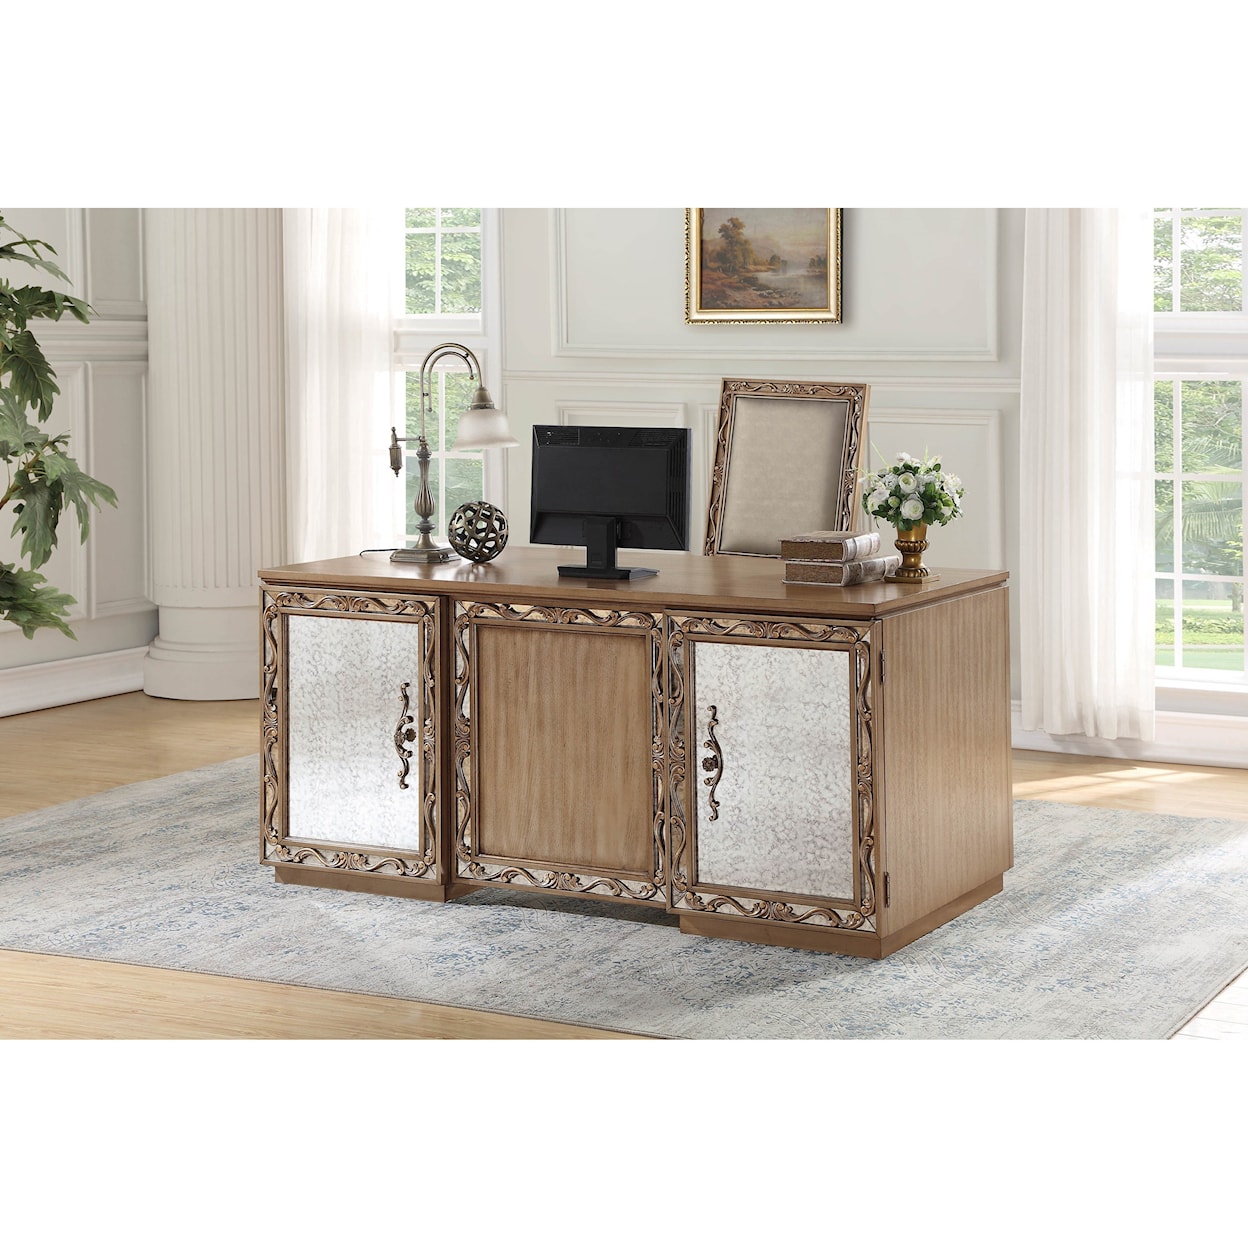 Acme Furniture Orianne Executive Desk